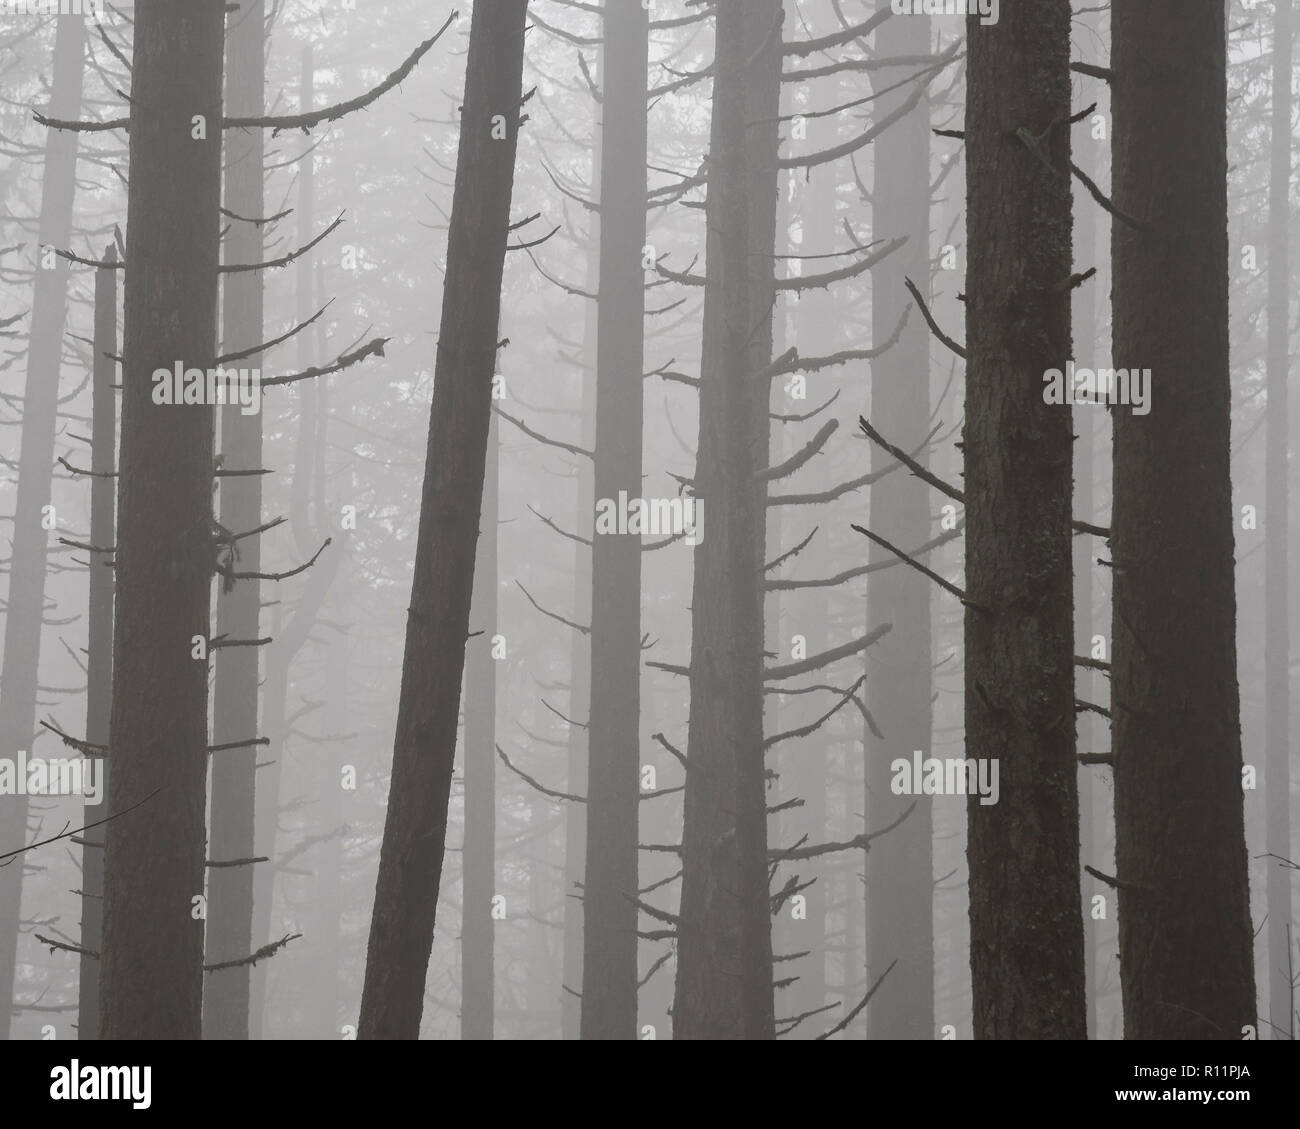 Bäume und Nebel; Ridgeline Trail, Hult City Park, Eugene, Oregon. Am 1 10 Snappy Warm Stockfoto